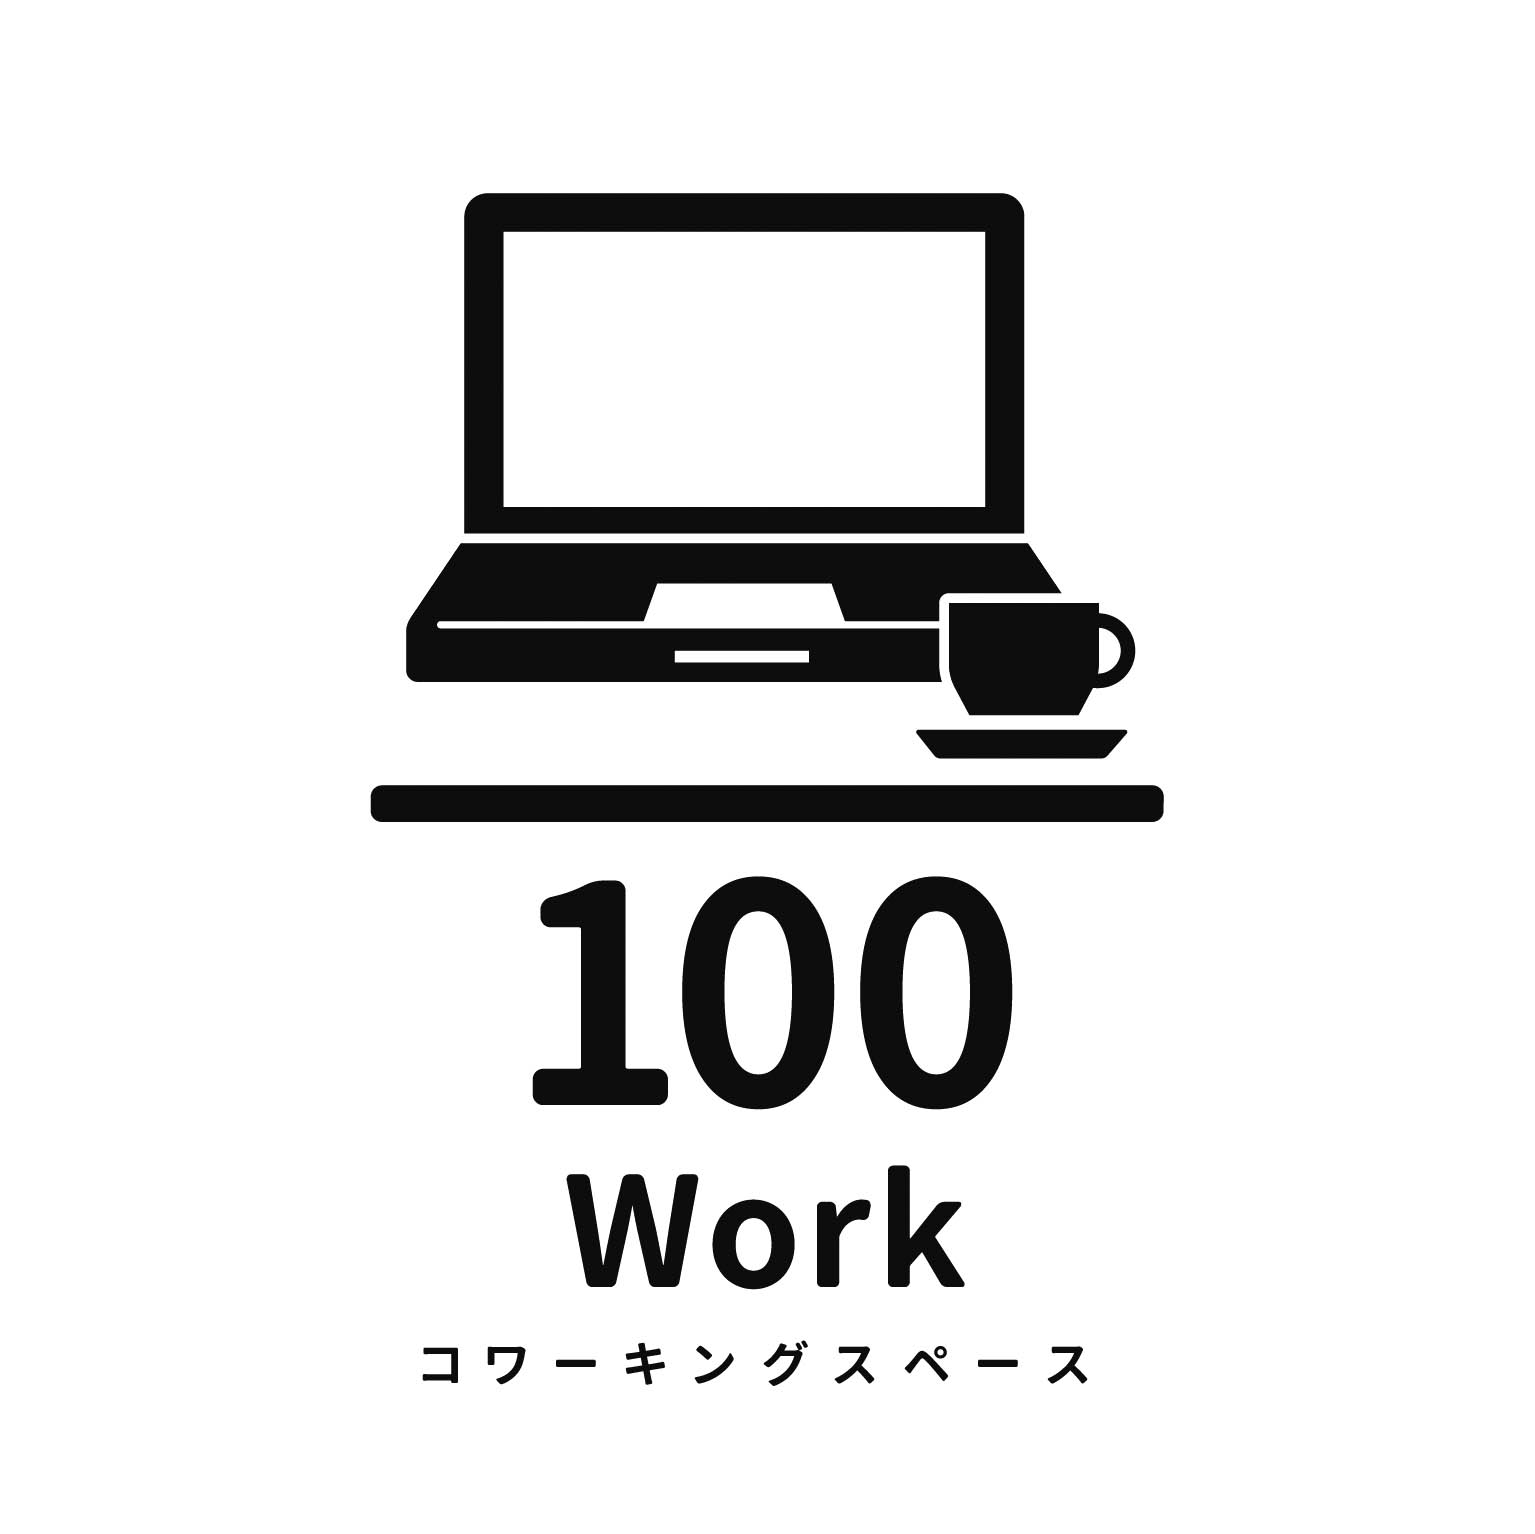 100 Work